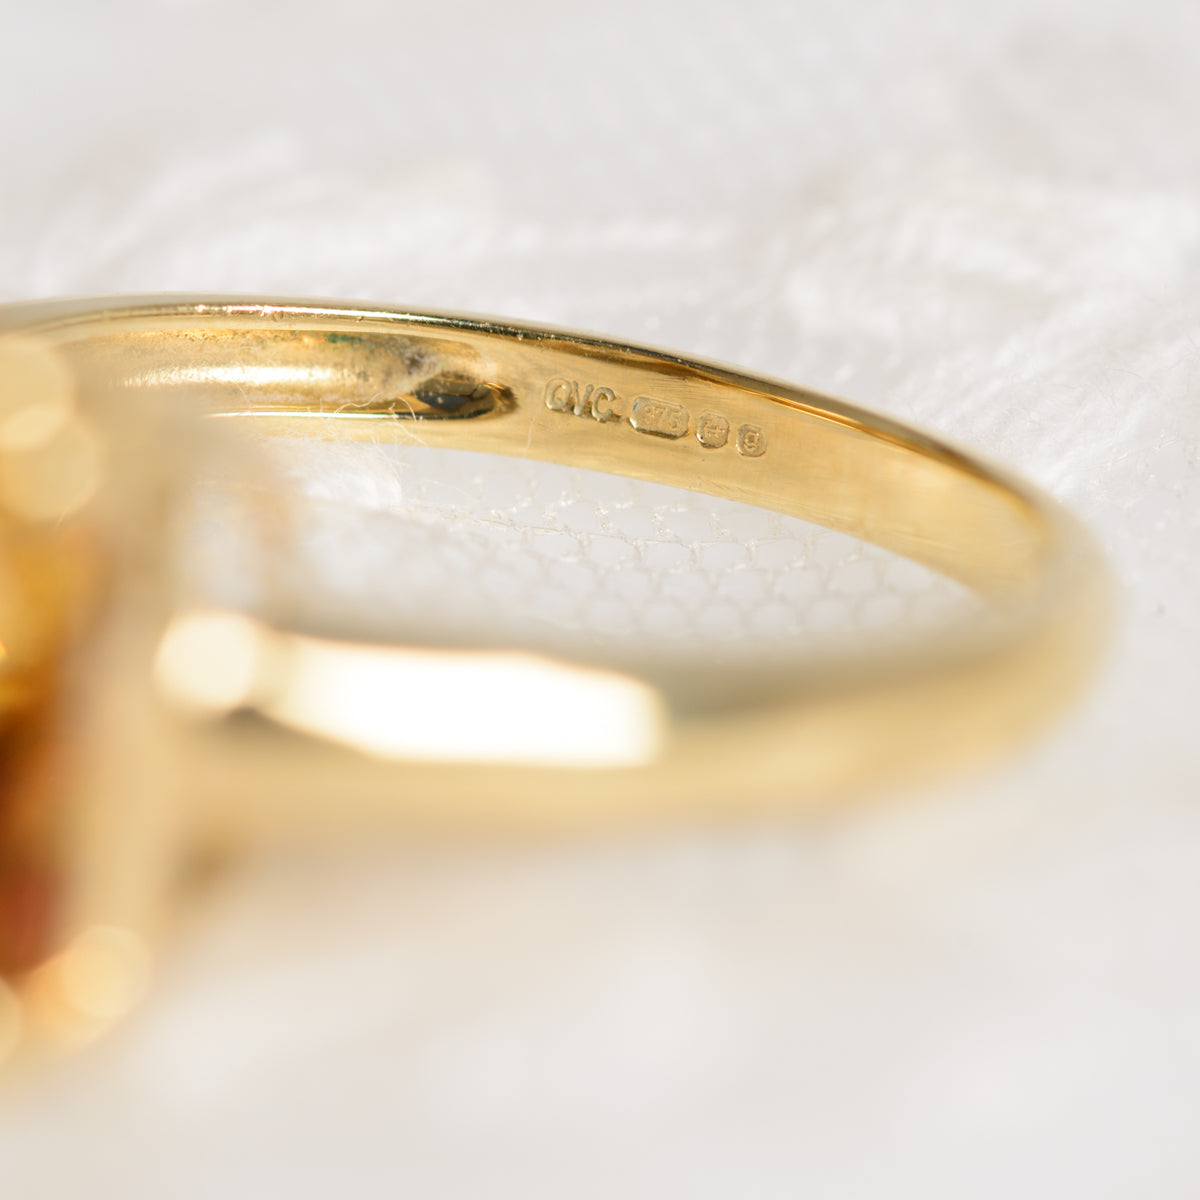 5 Carat Natural Citrine Gemstone Ring In 9ct Gold Square Cut Gem  (A1380)